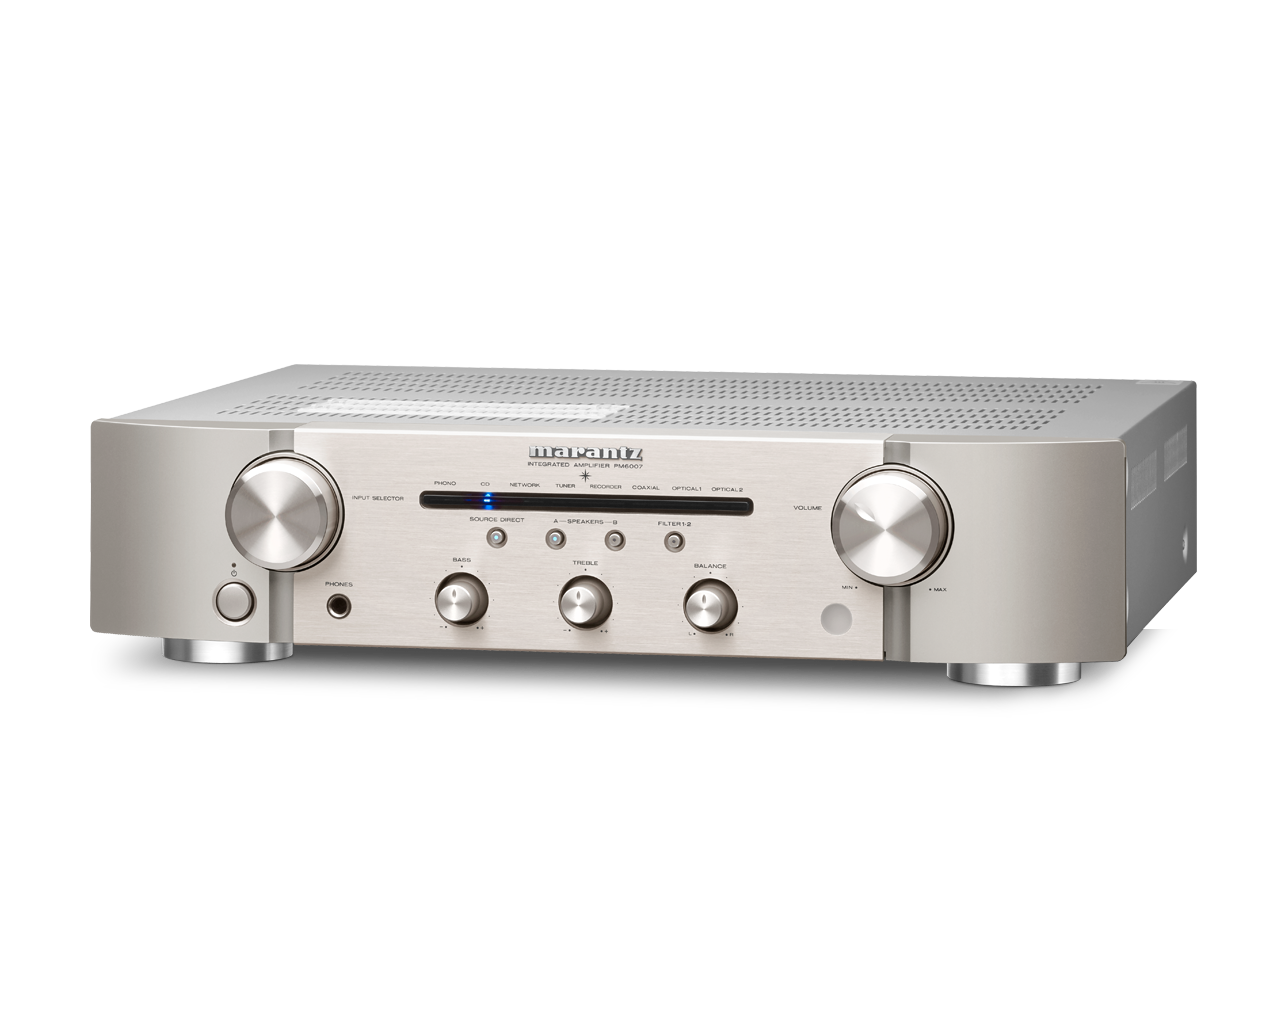 Marantz PM6007 stereo amplifier